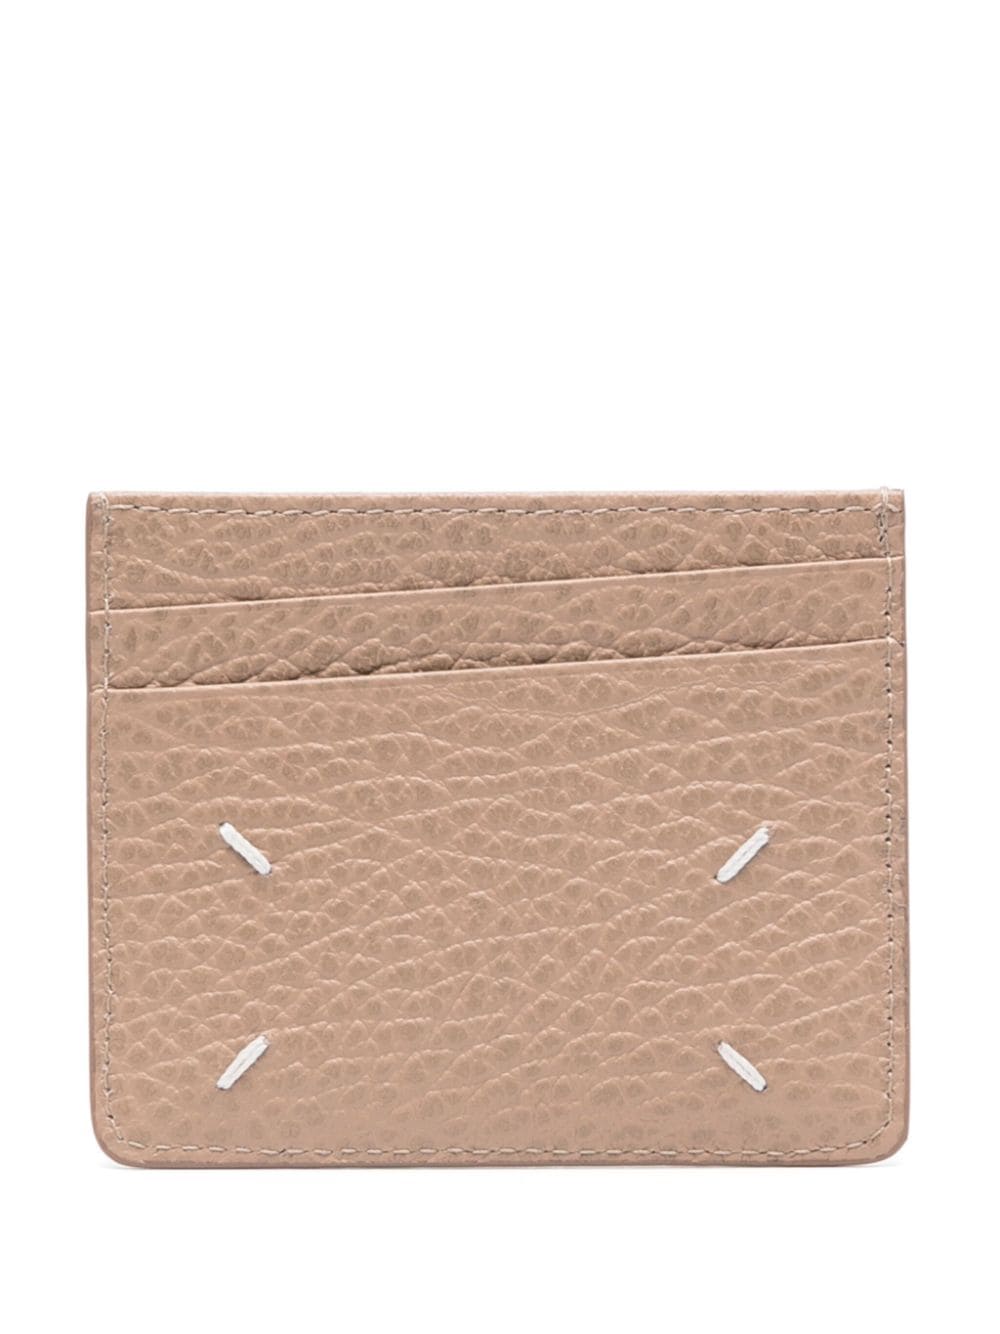 Image 2 of Maison Margiela Four Stitches leather wallet